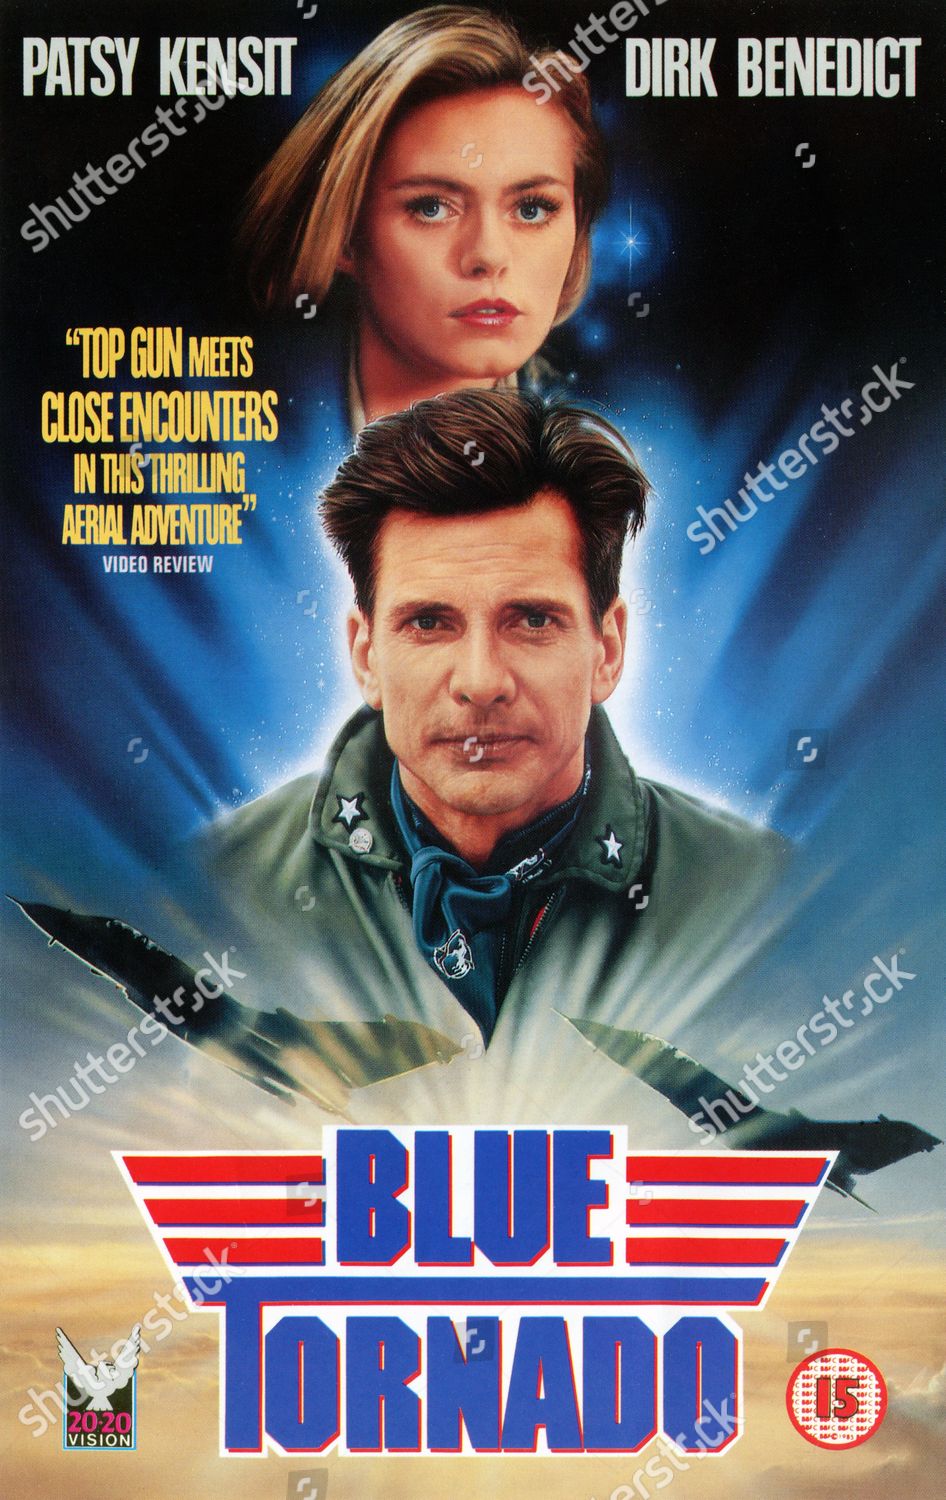 Blue Tornado (1991) Screenshot 1 